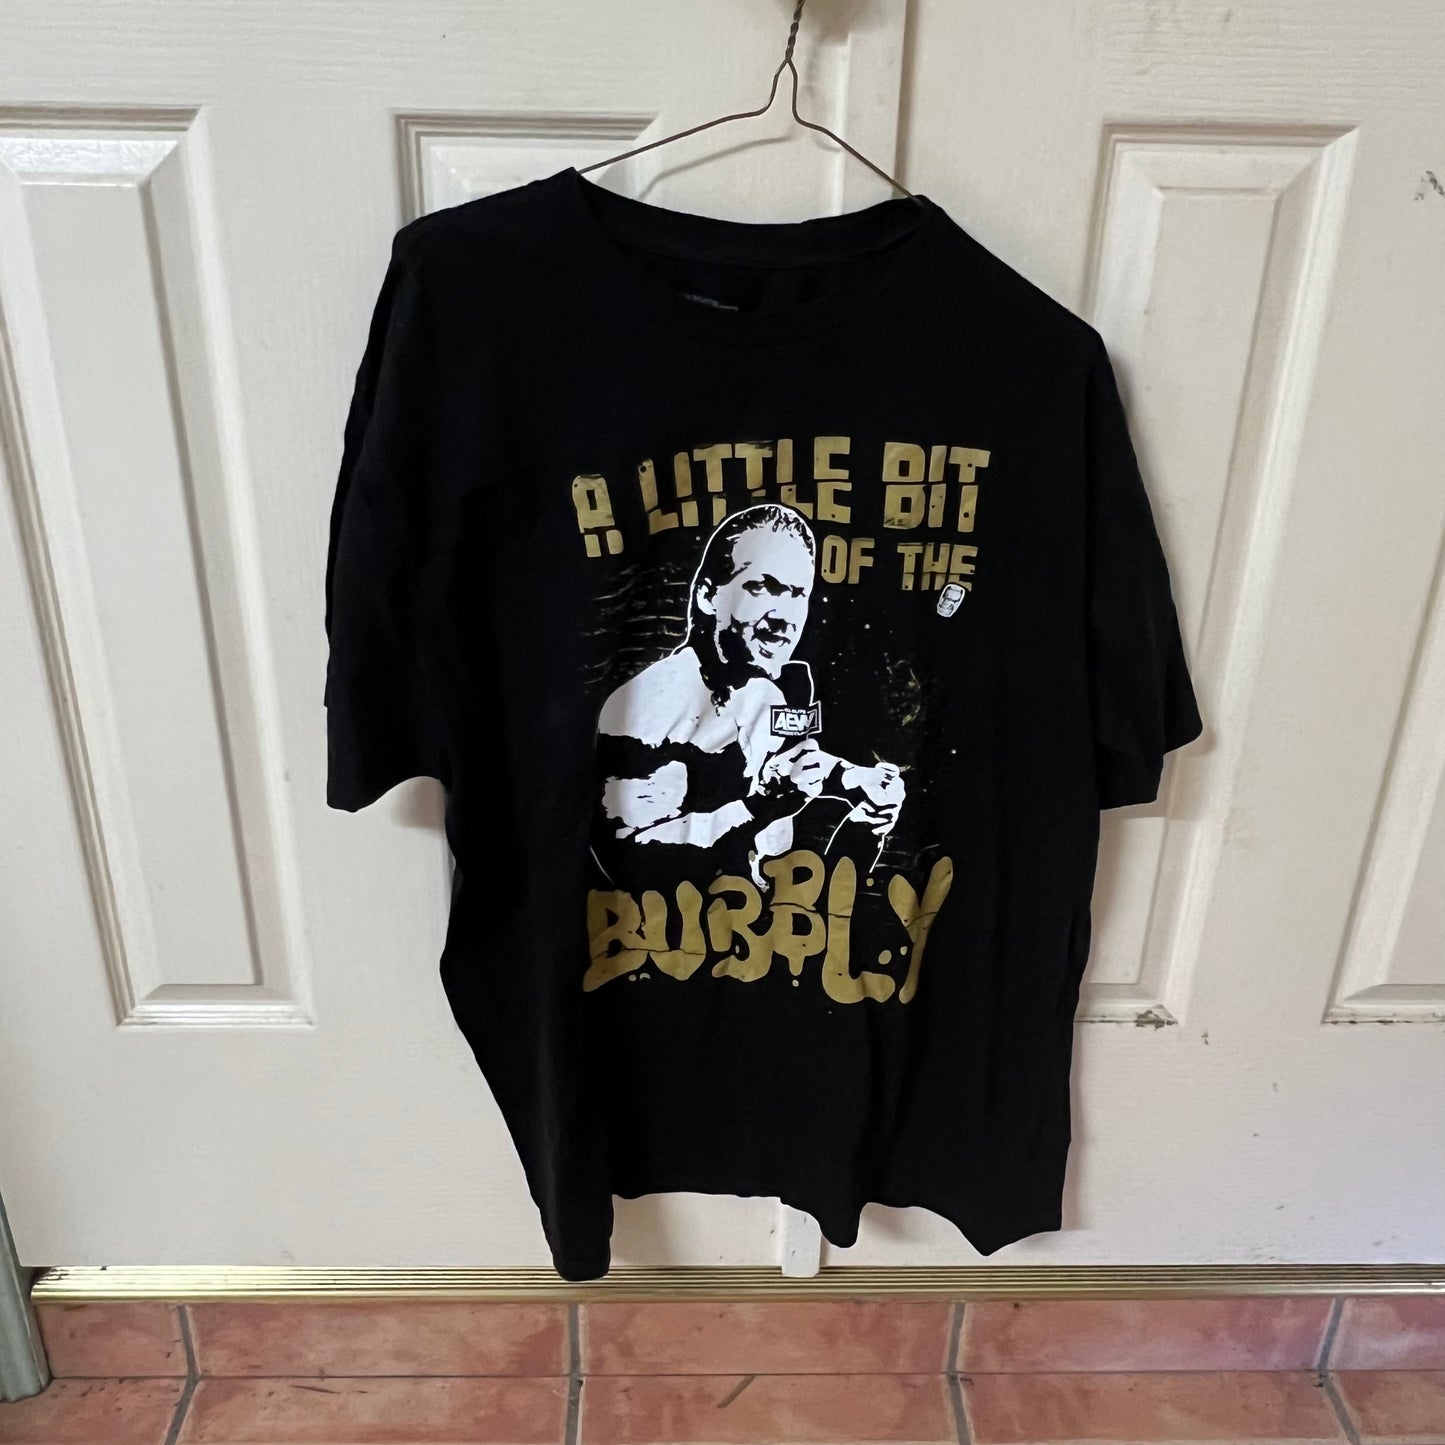 Chris Jericho Bubbly - XL Size - Official AEW Shirt